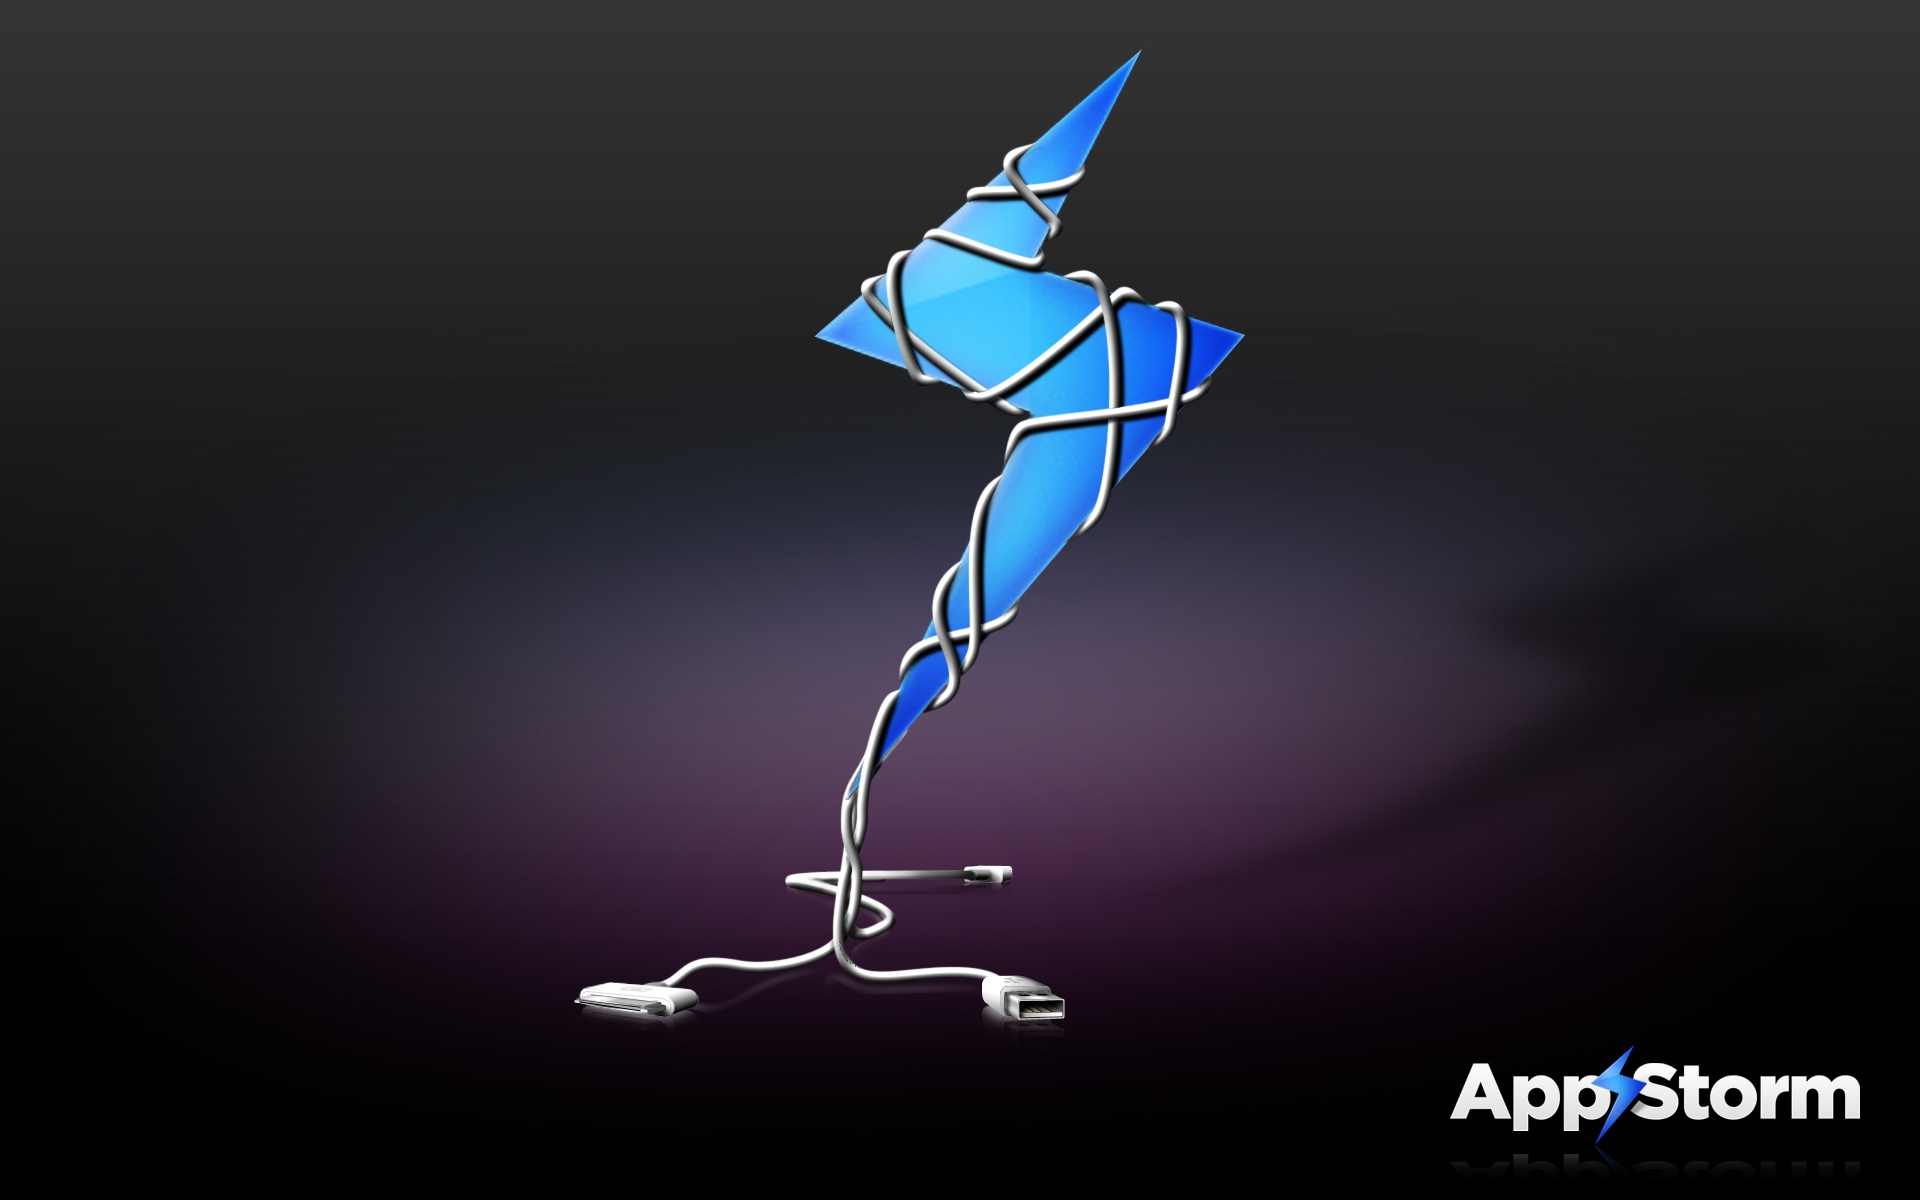 Картинки App storm, apple, mac, blue, purple, rope фото и обои на рабочий стол